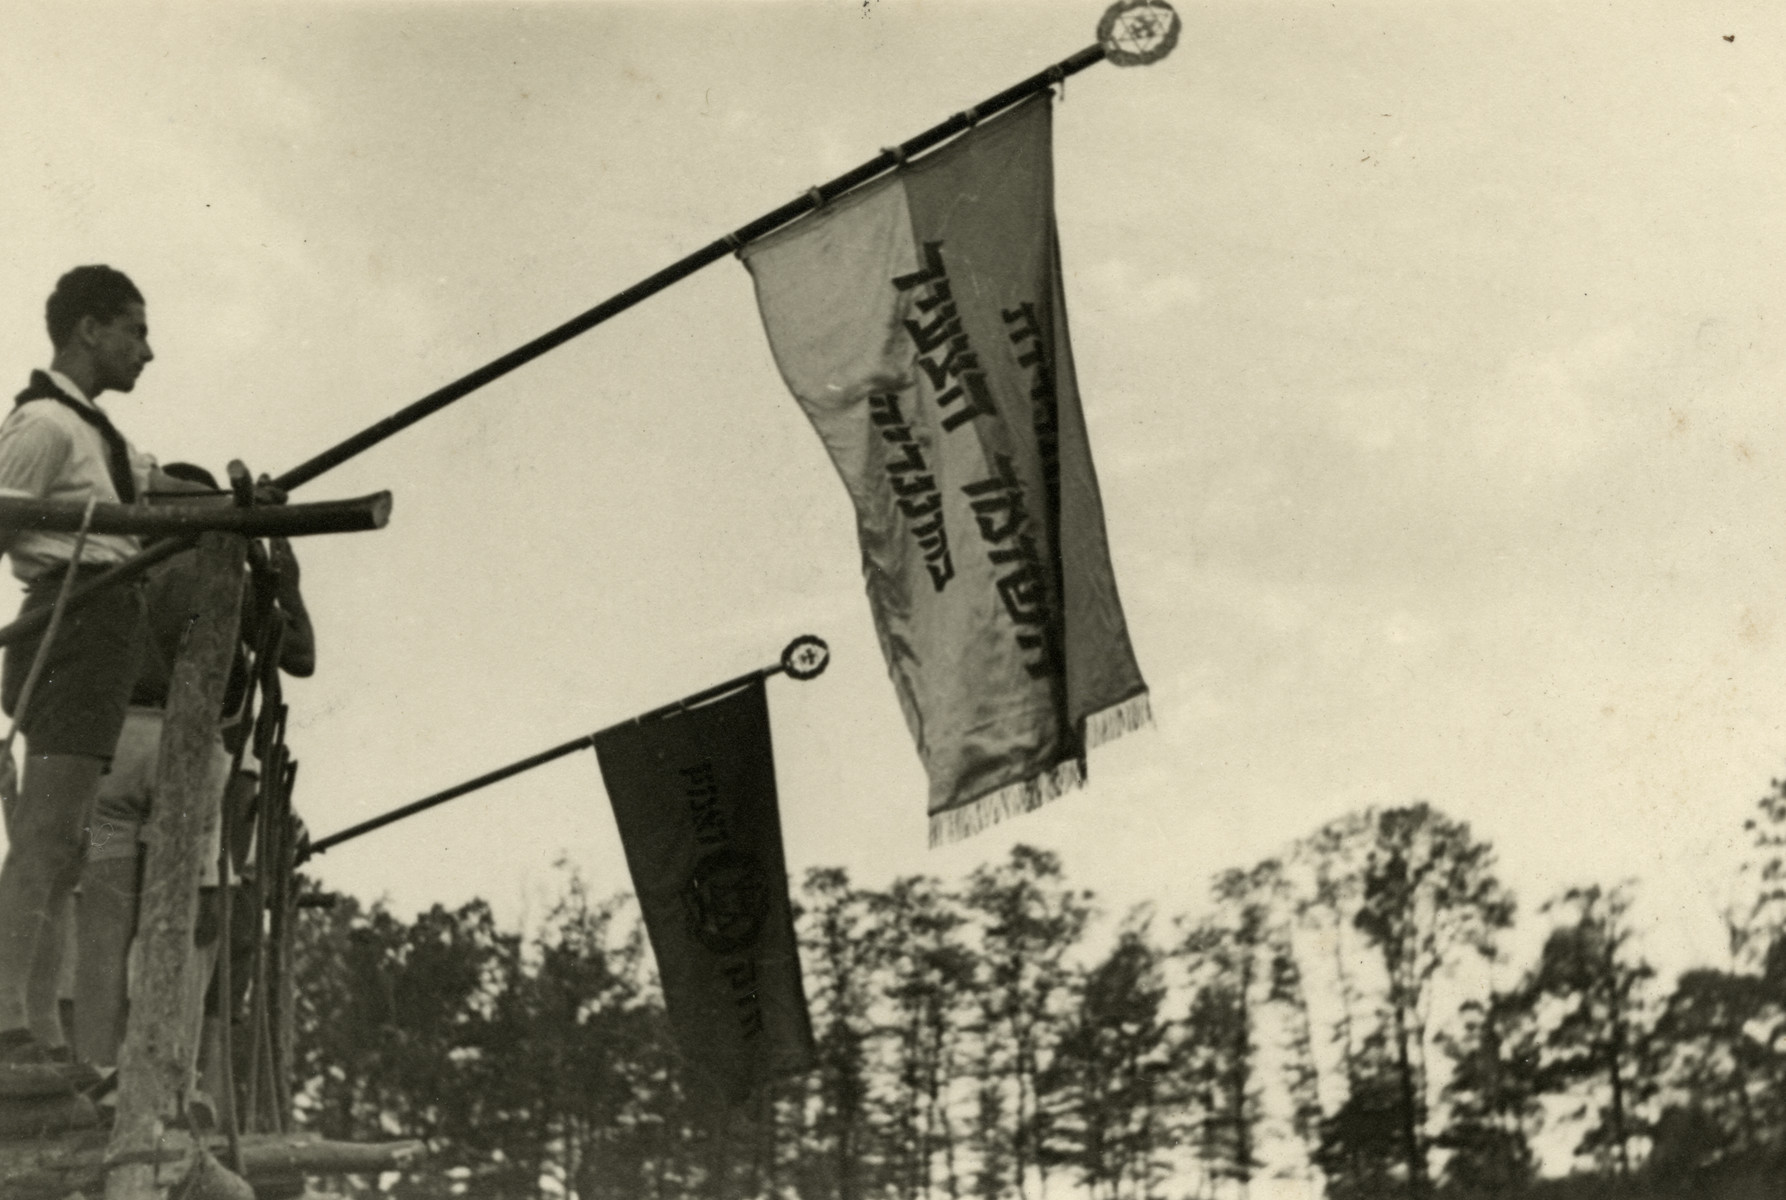 Ephraim Teichman holds the Shomer Hatzair flag in Shomria, a Zionist summer camp in postwar Hungary.